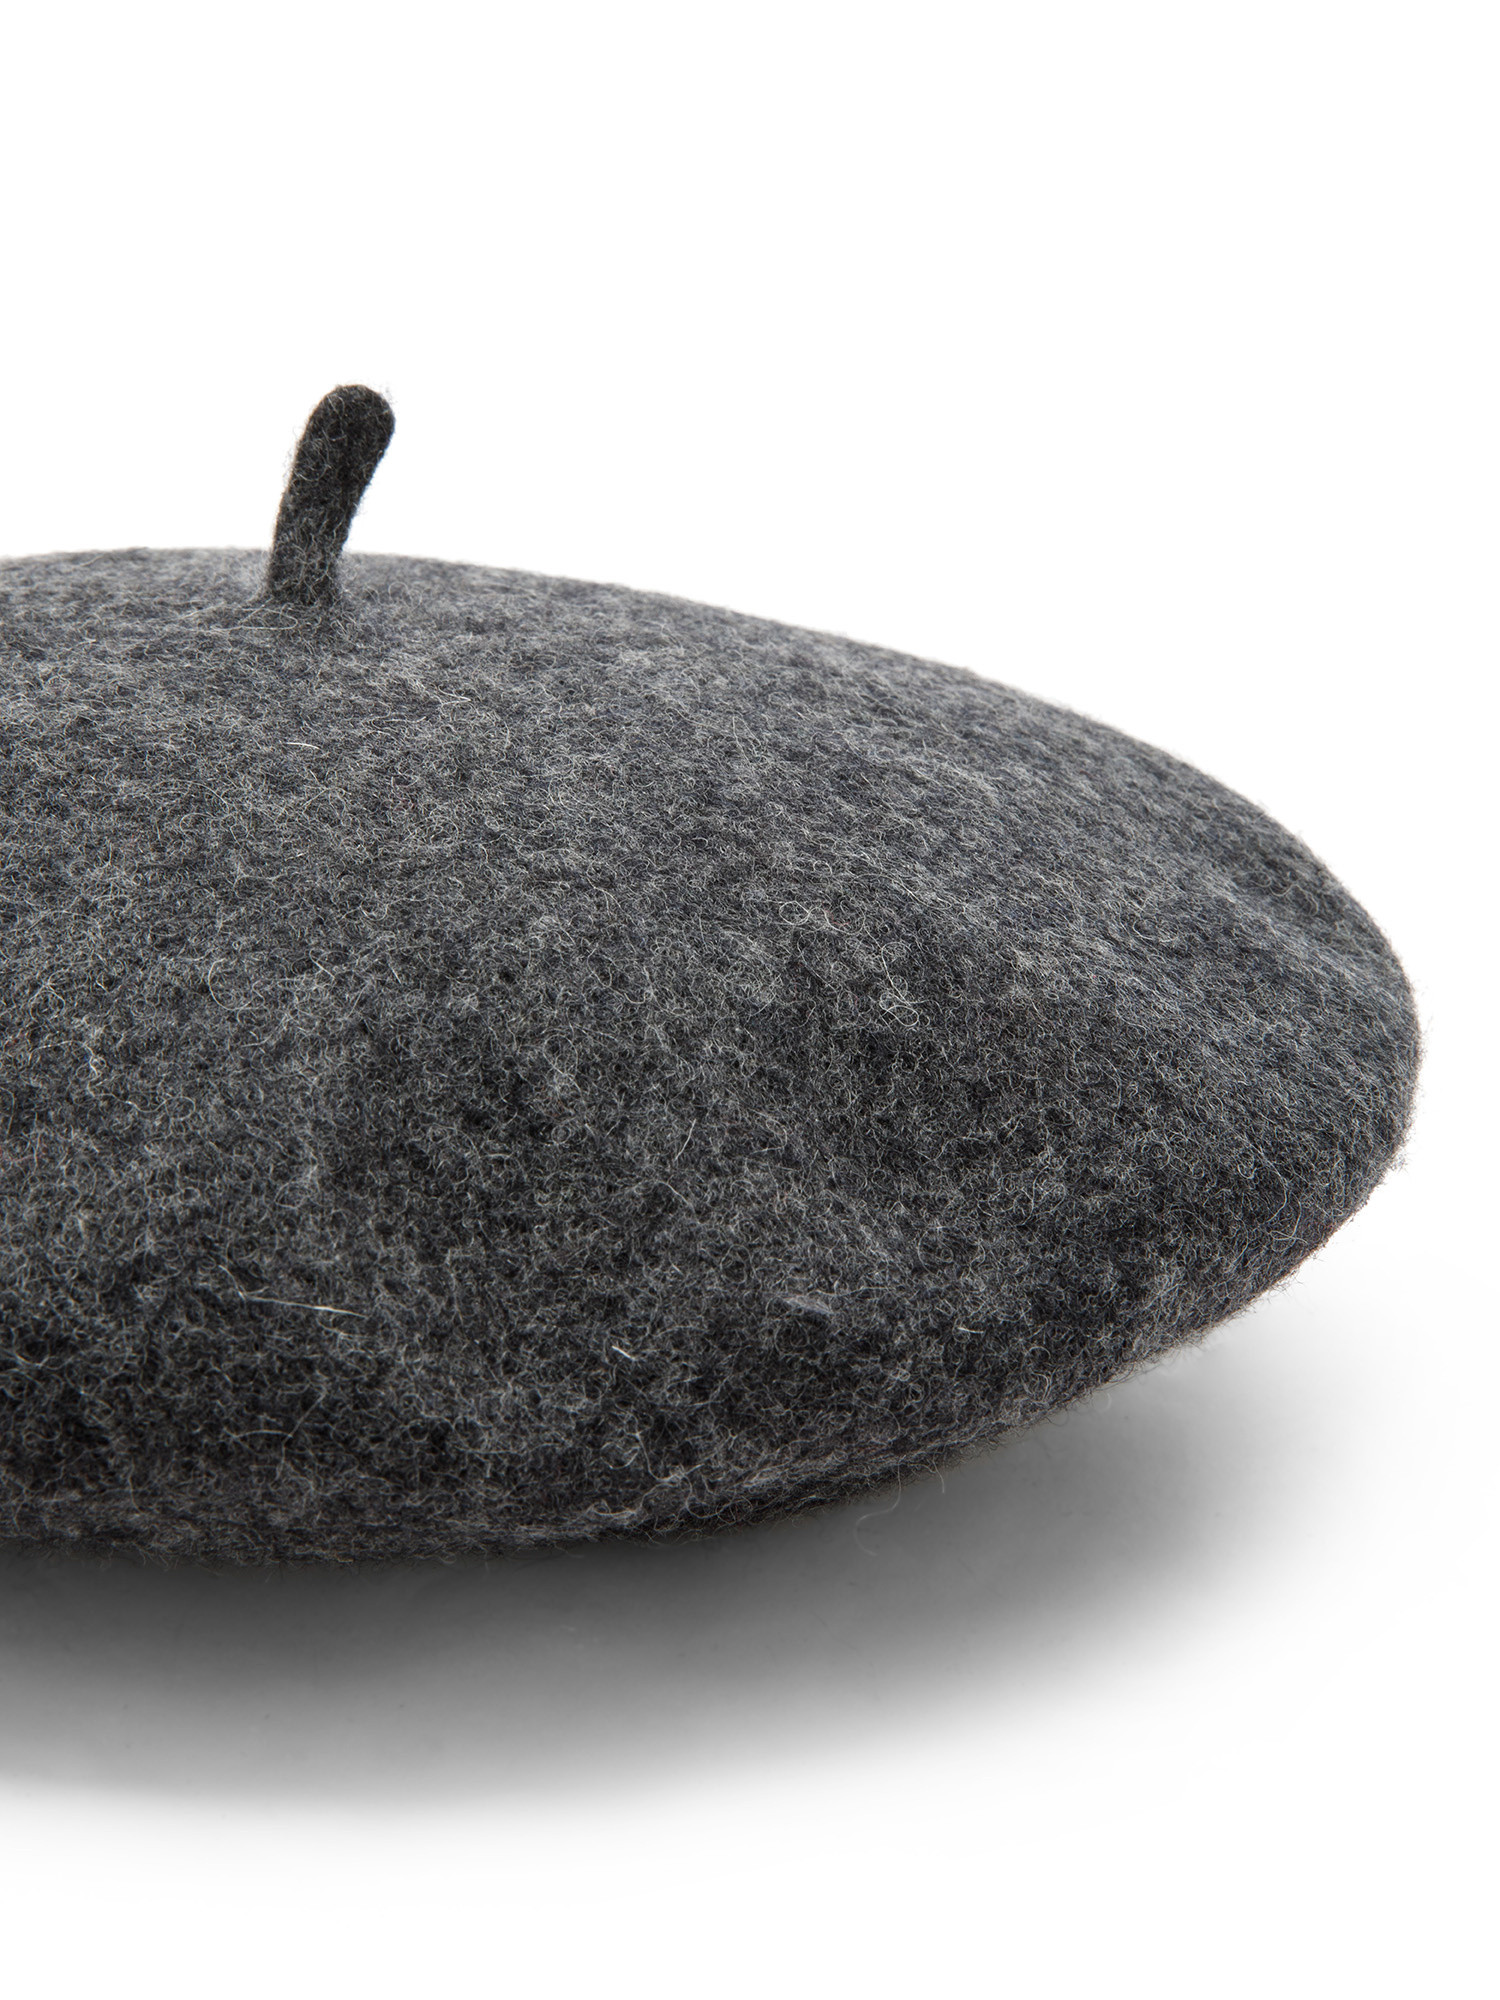 Koan - Pure wool beret, Dark Grey, large image number 1